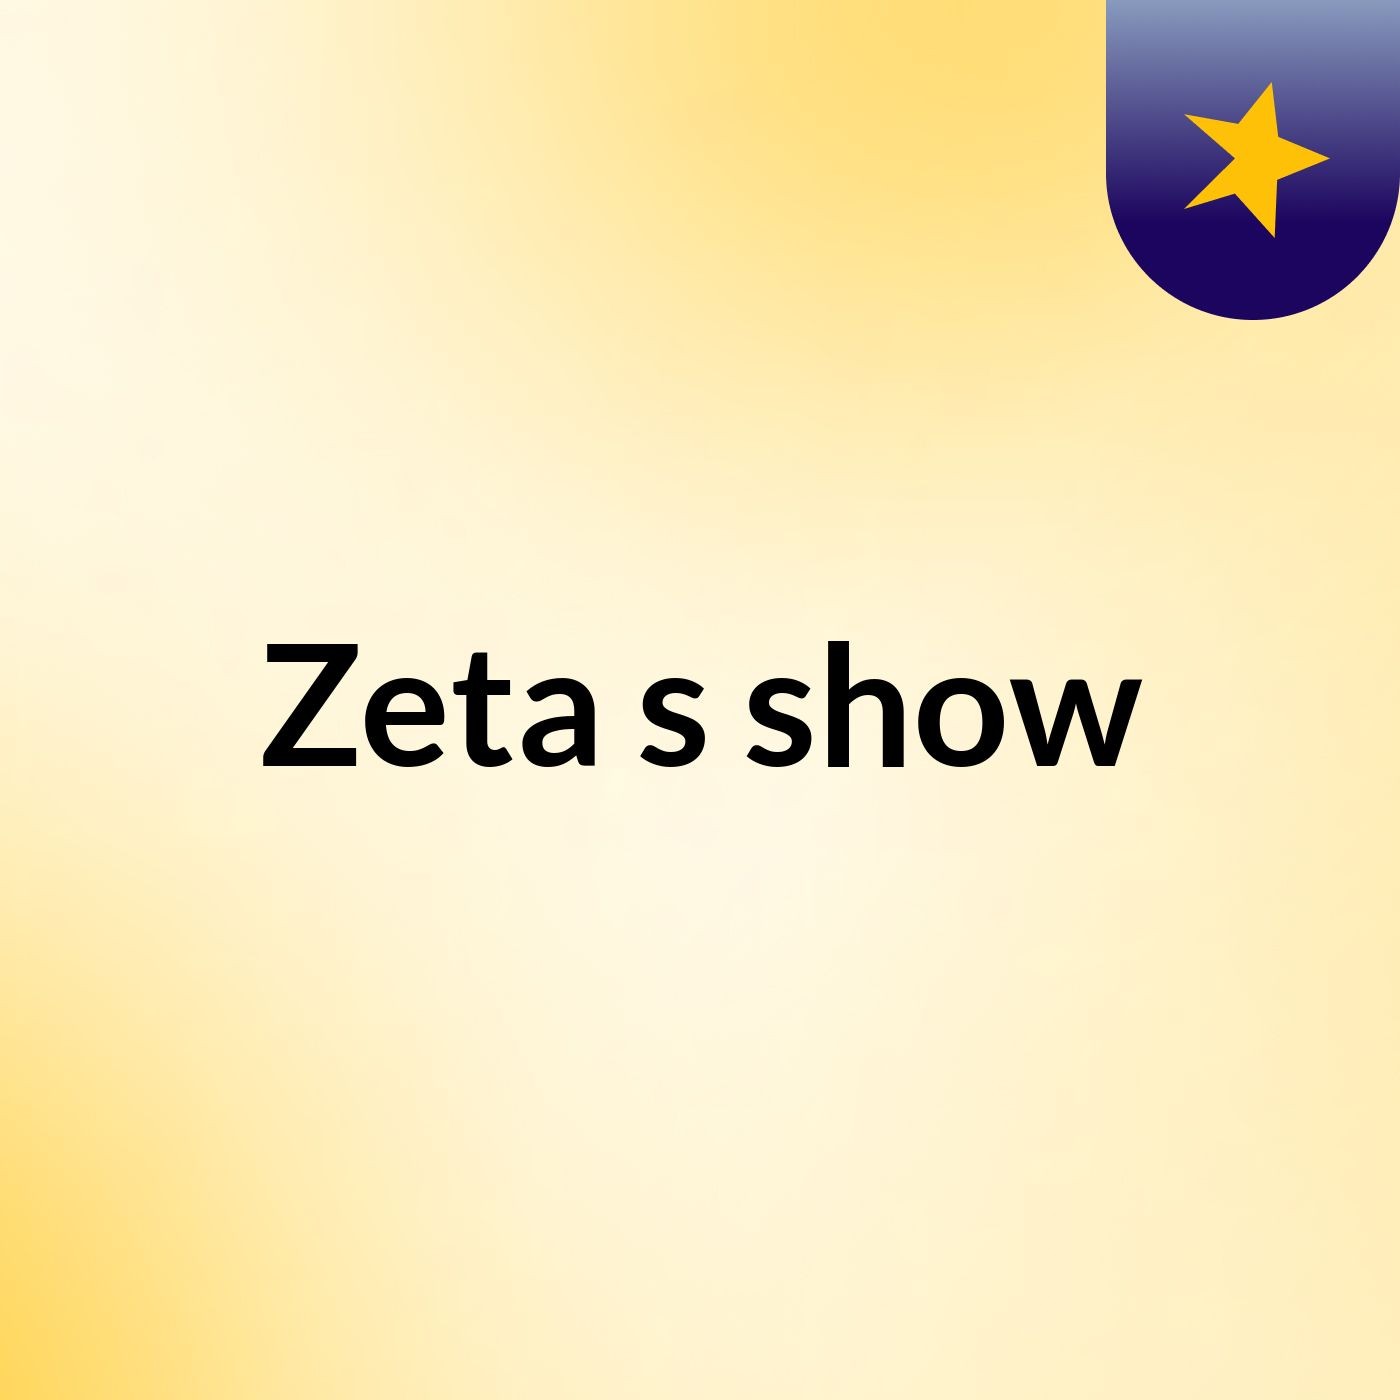 Zeta's show